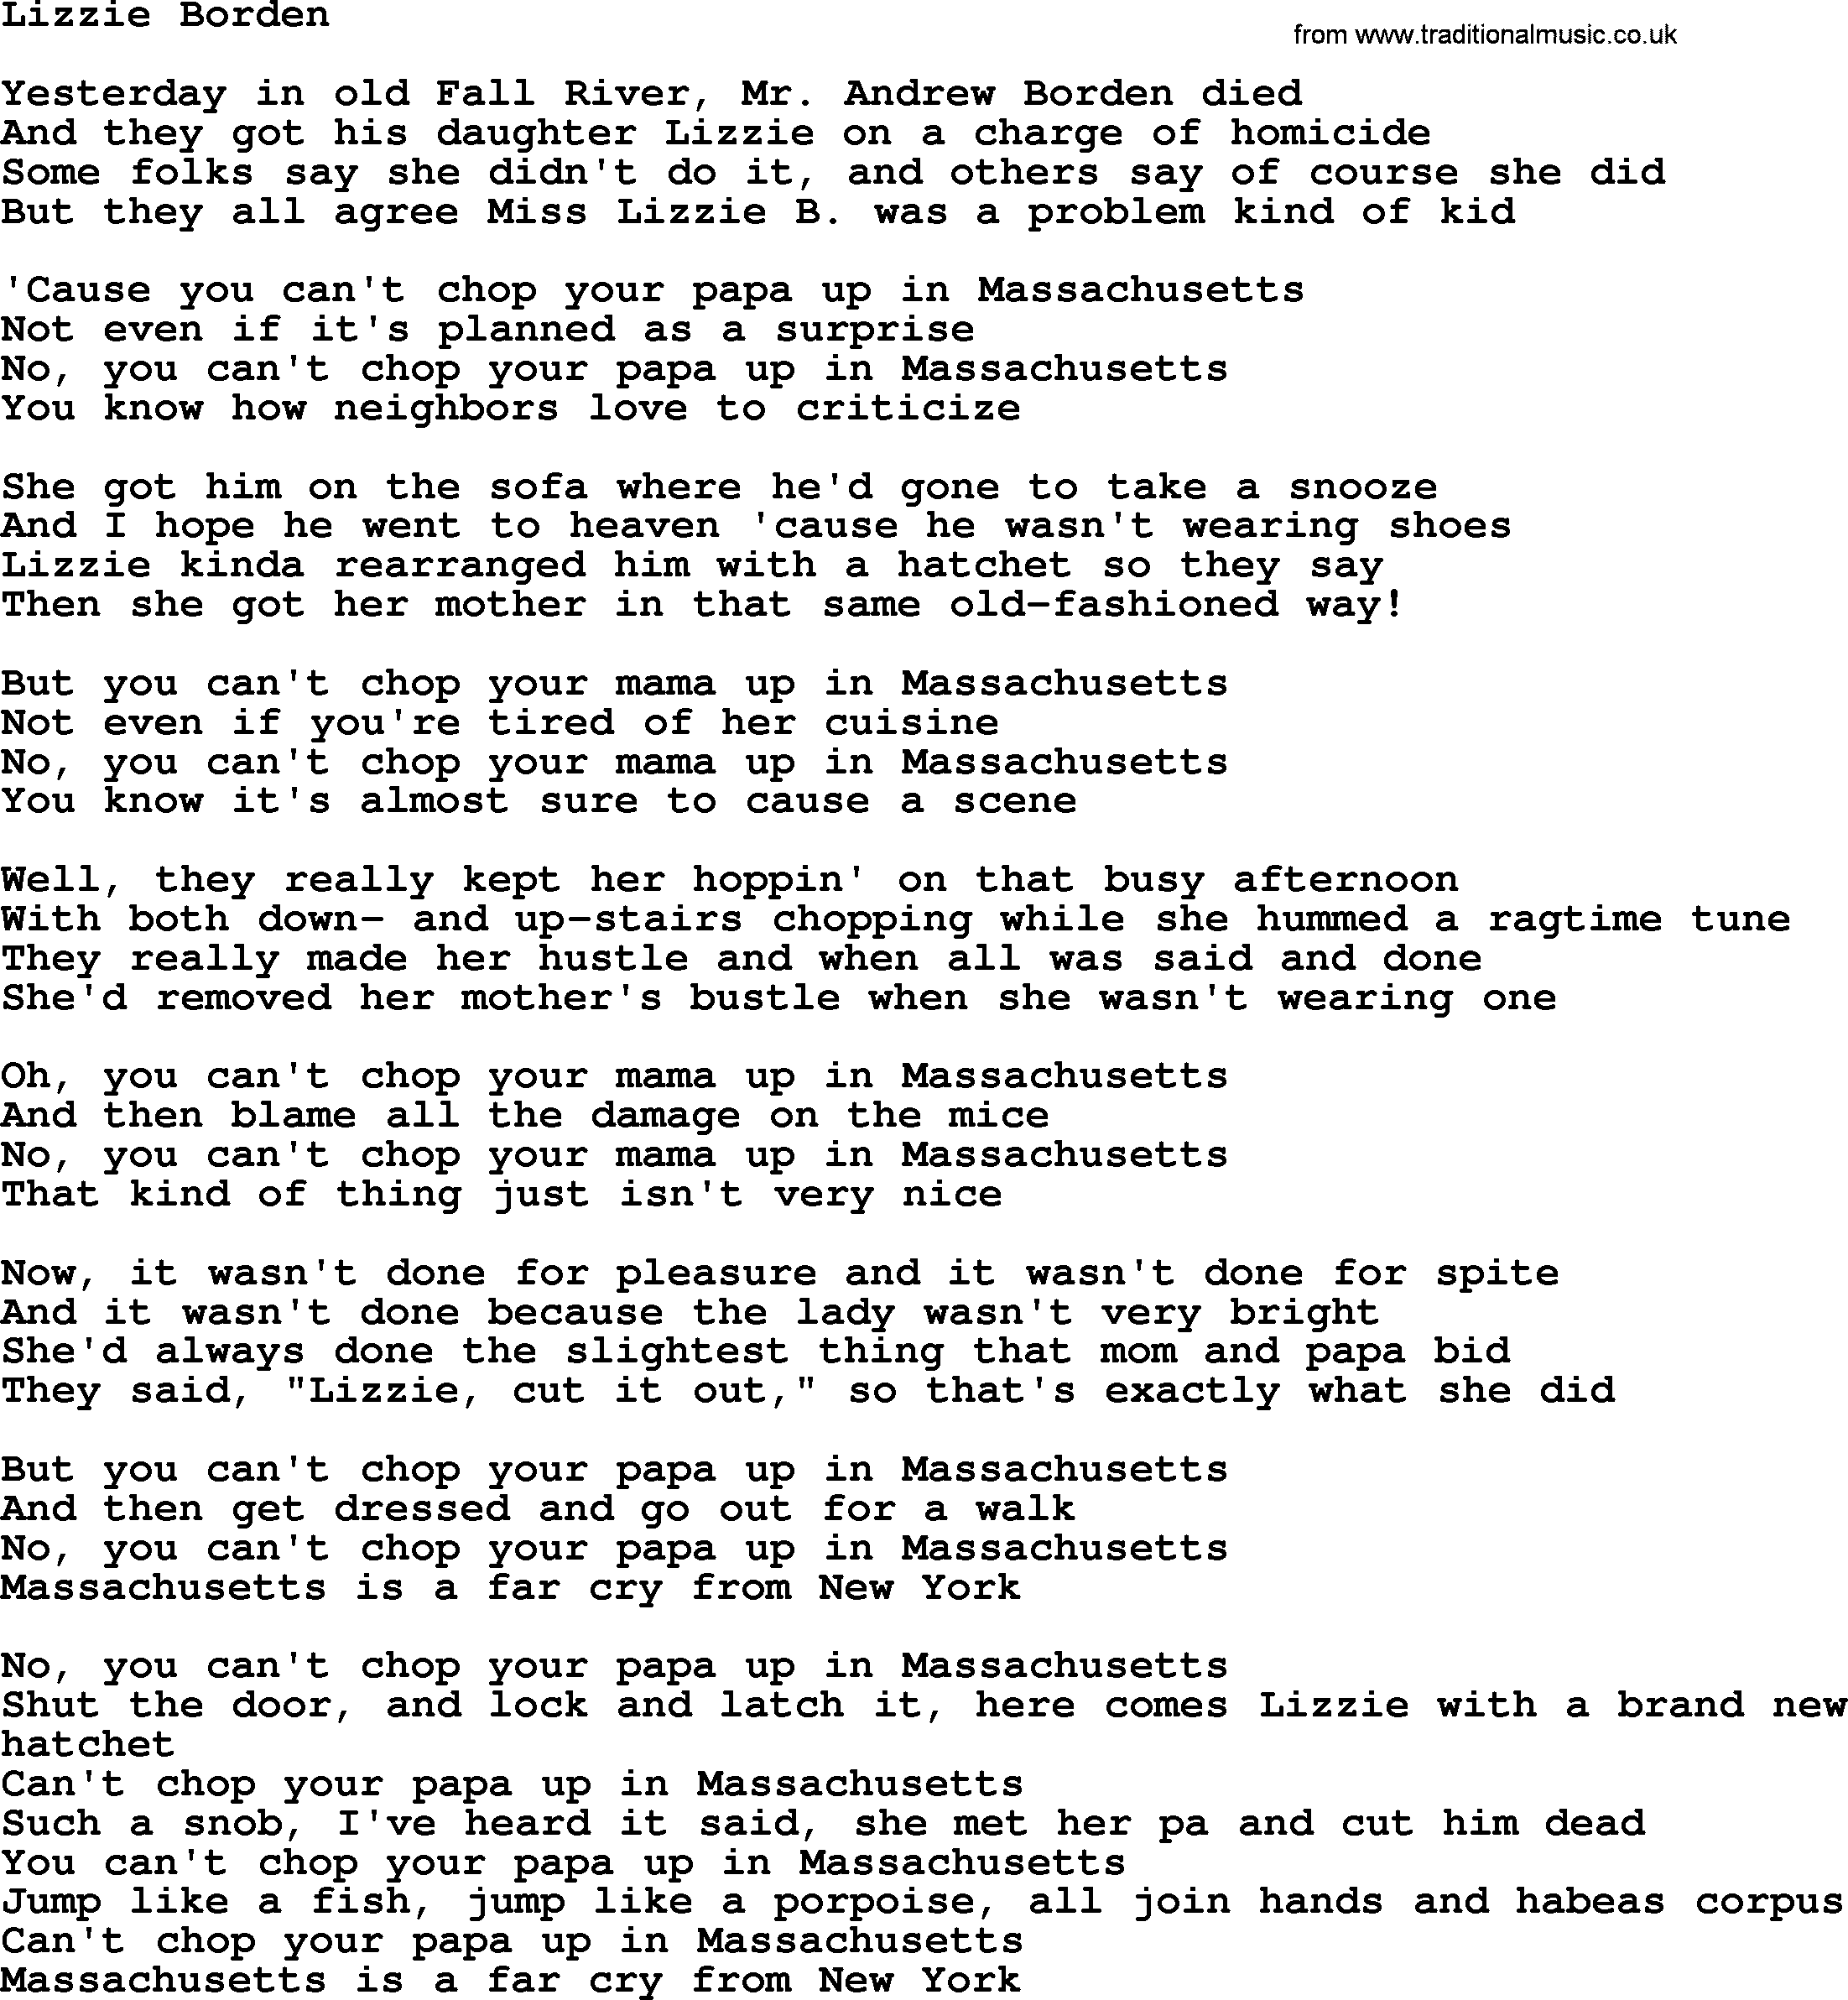 Lizzie Borden, by The Byrds - lyrics with pdf